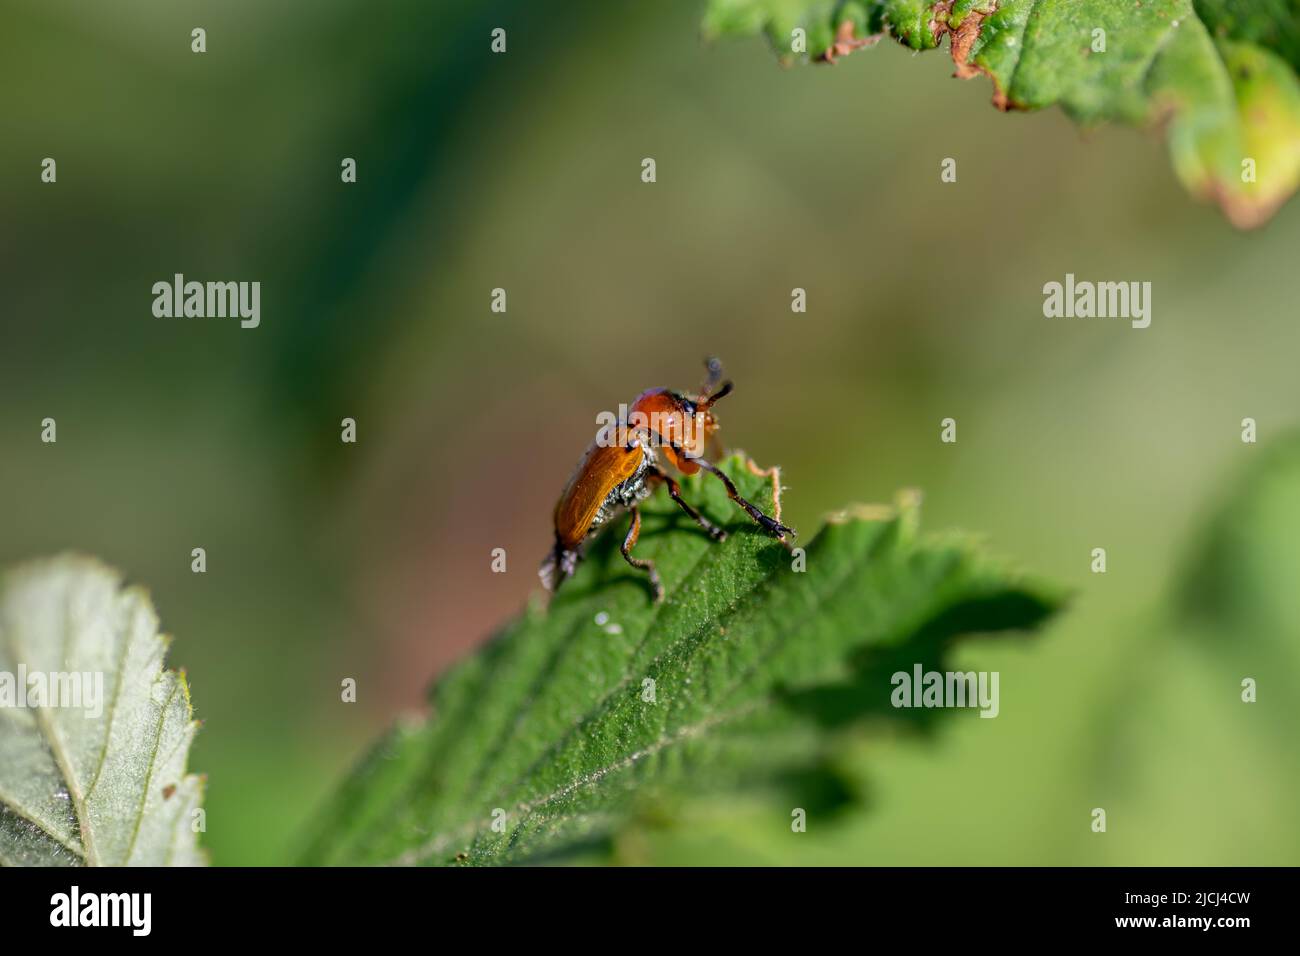 Macro shot of a ladybug on a leaf. Stock Photo